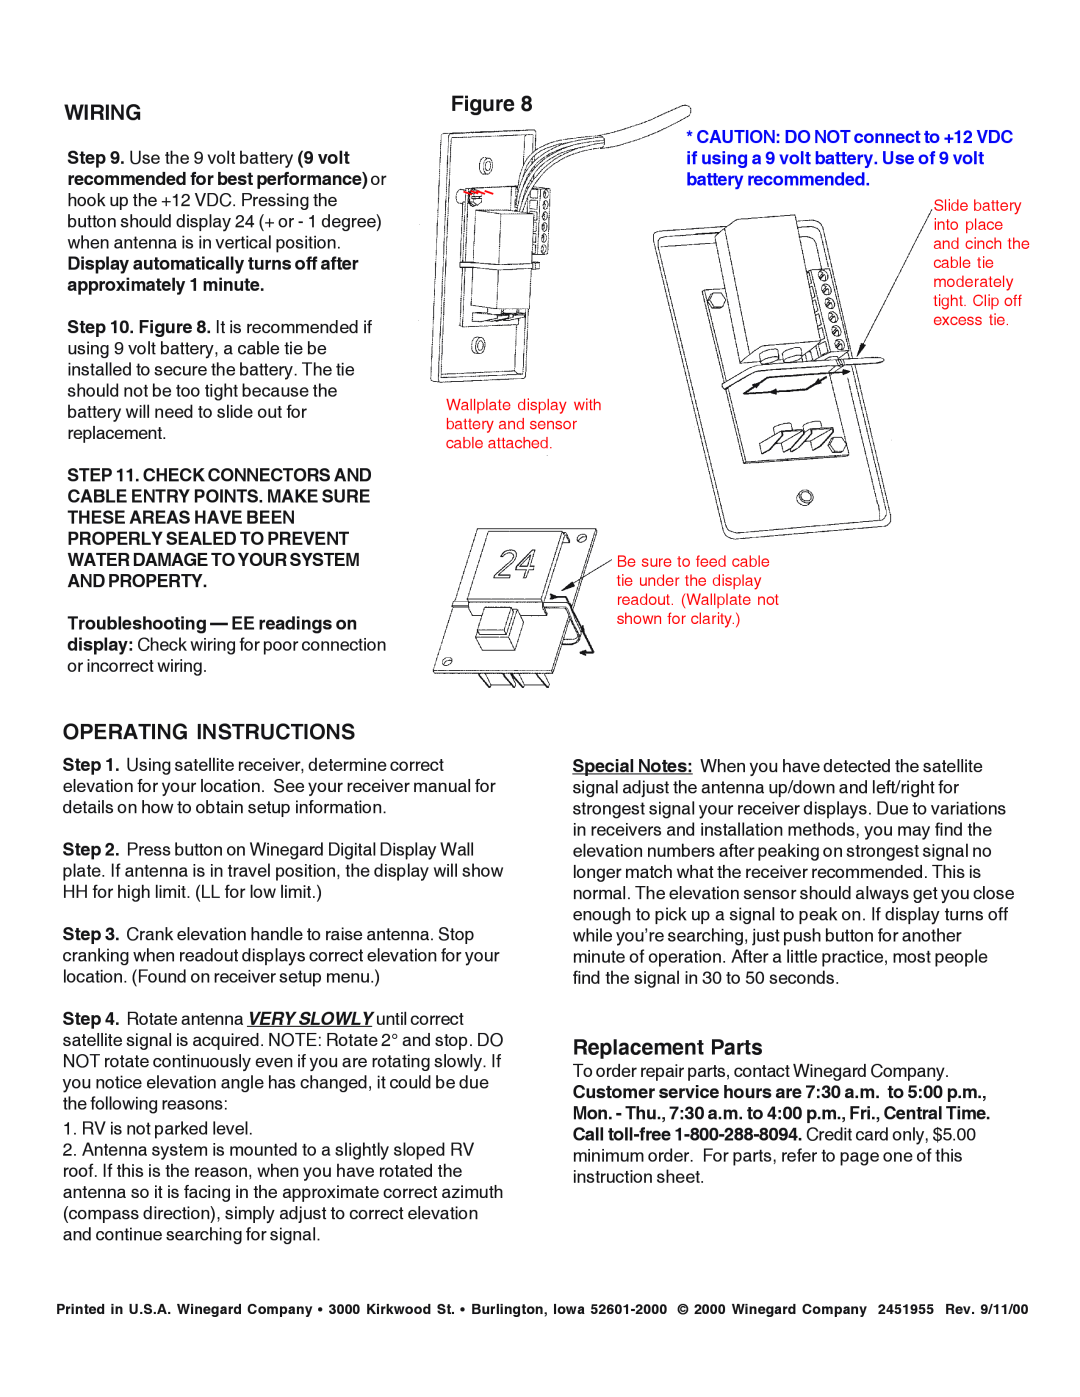 Winegard DE-4600, DE-4646 manual Wiring, Operating Instructions, Replacement Parts 